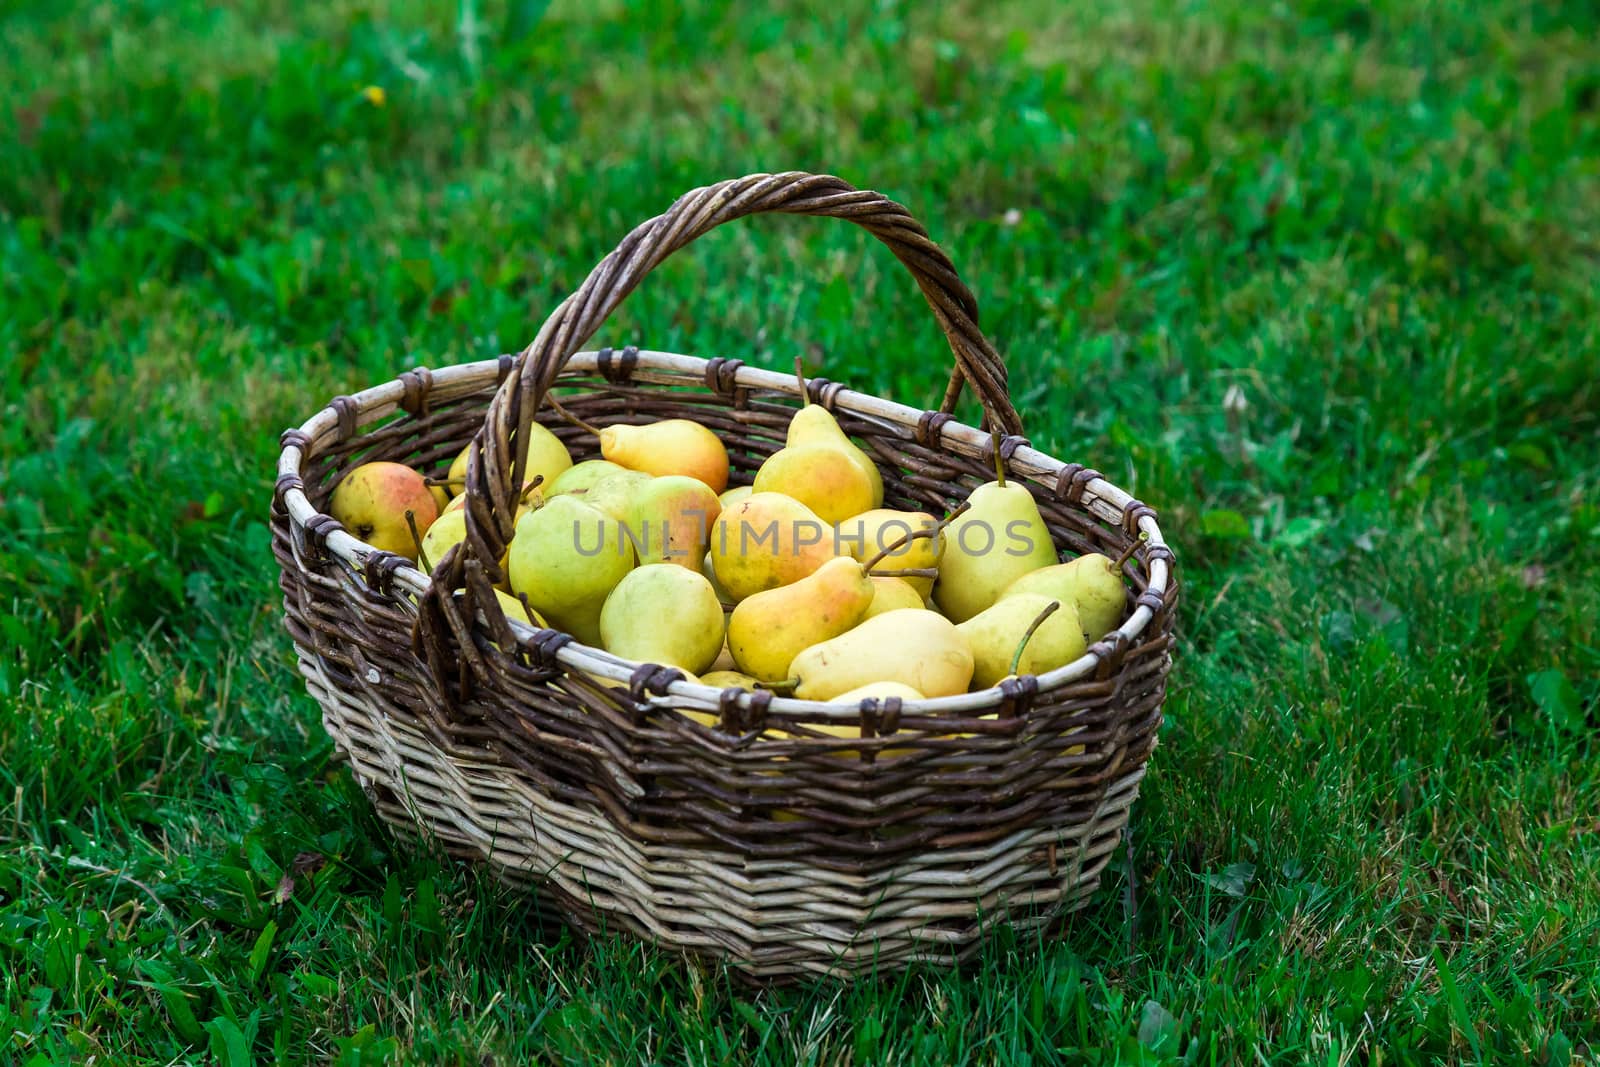 juicy tasty pears in a basket on a green lawn